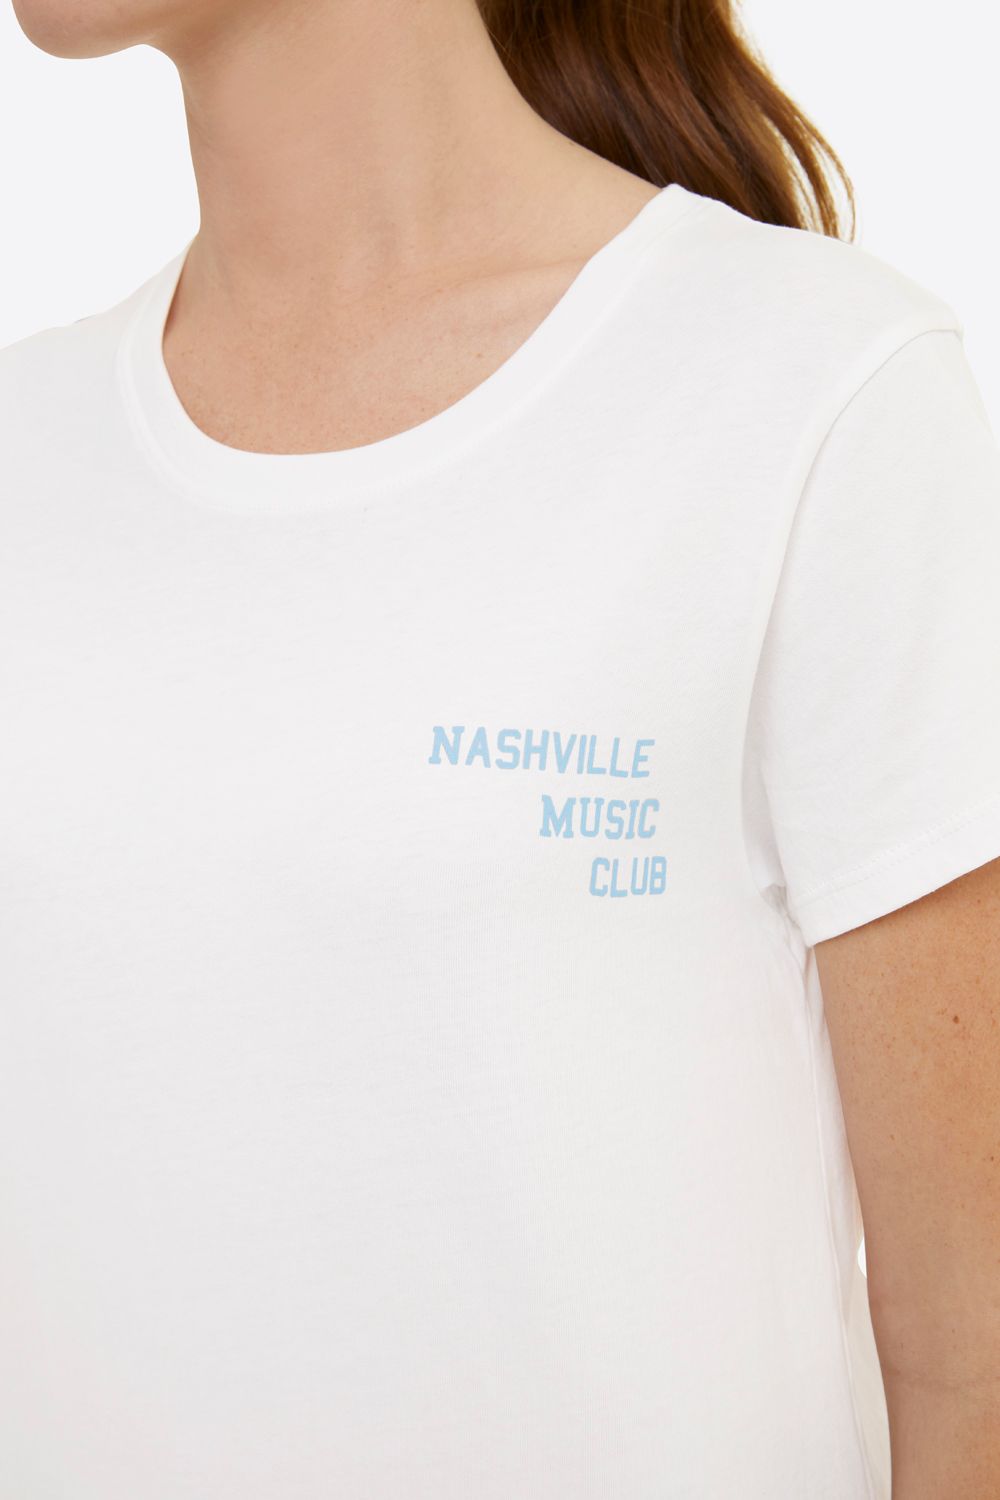 Nashville Music Club T-Shirt